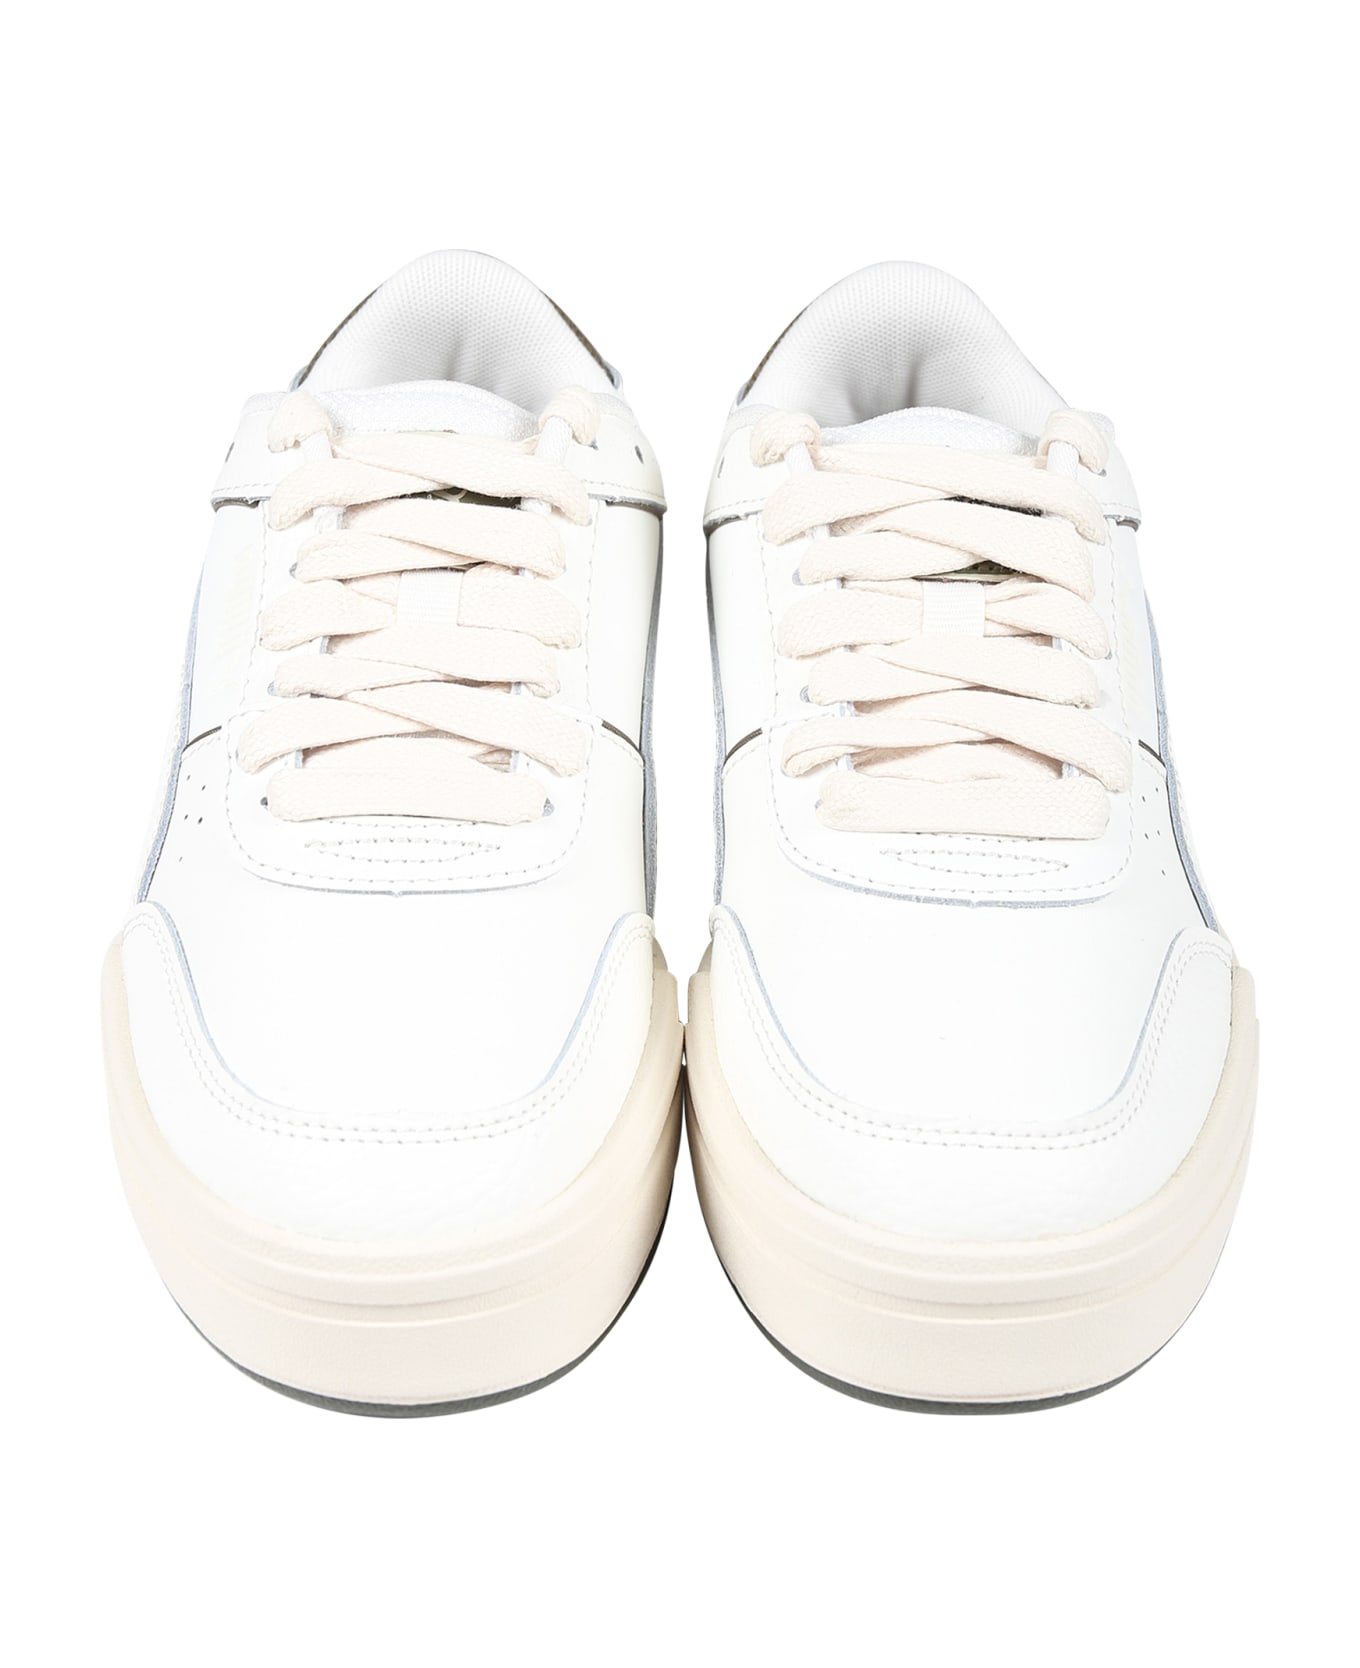 Puma White Sneakers For Kids With Logo - White シューズ